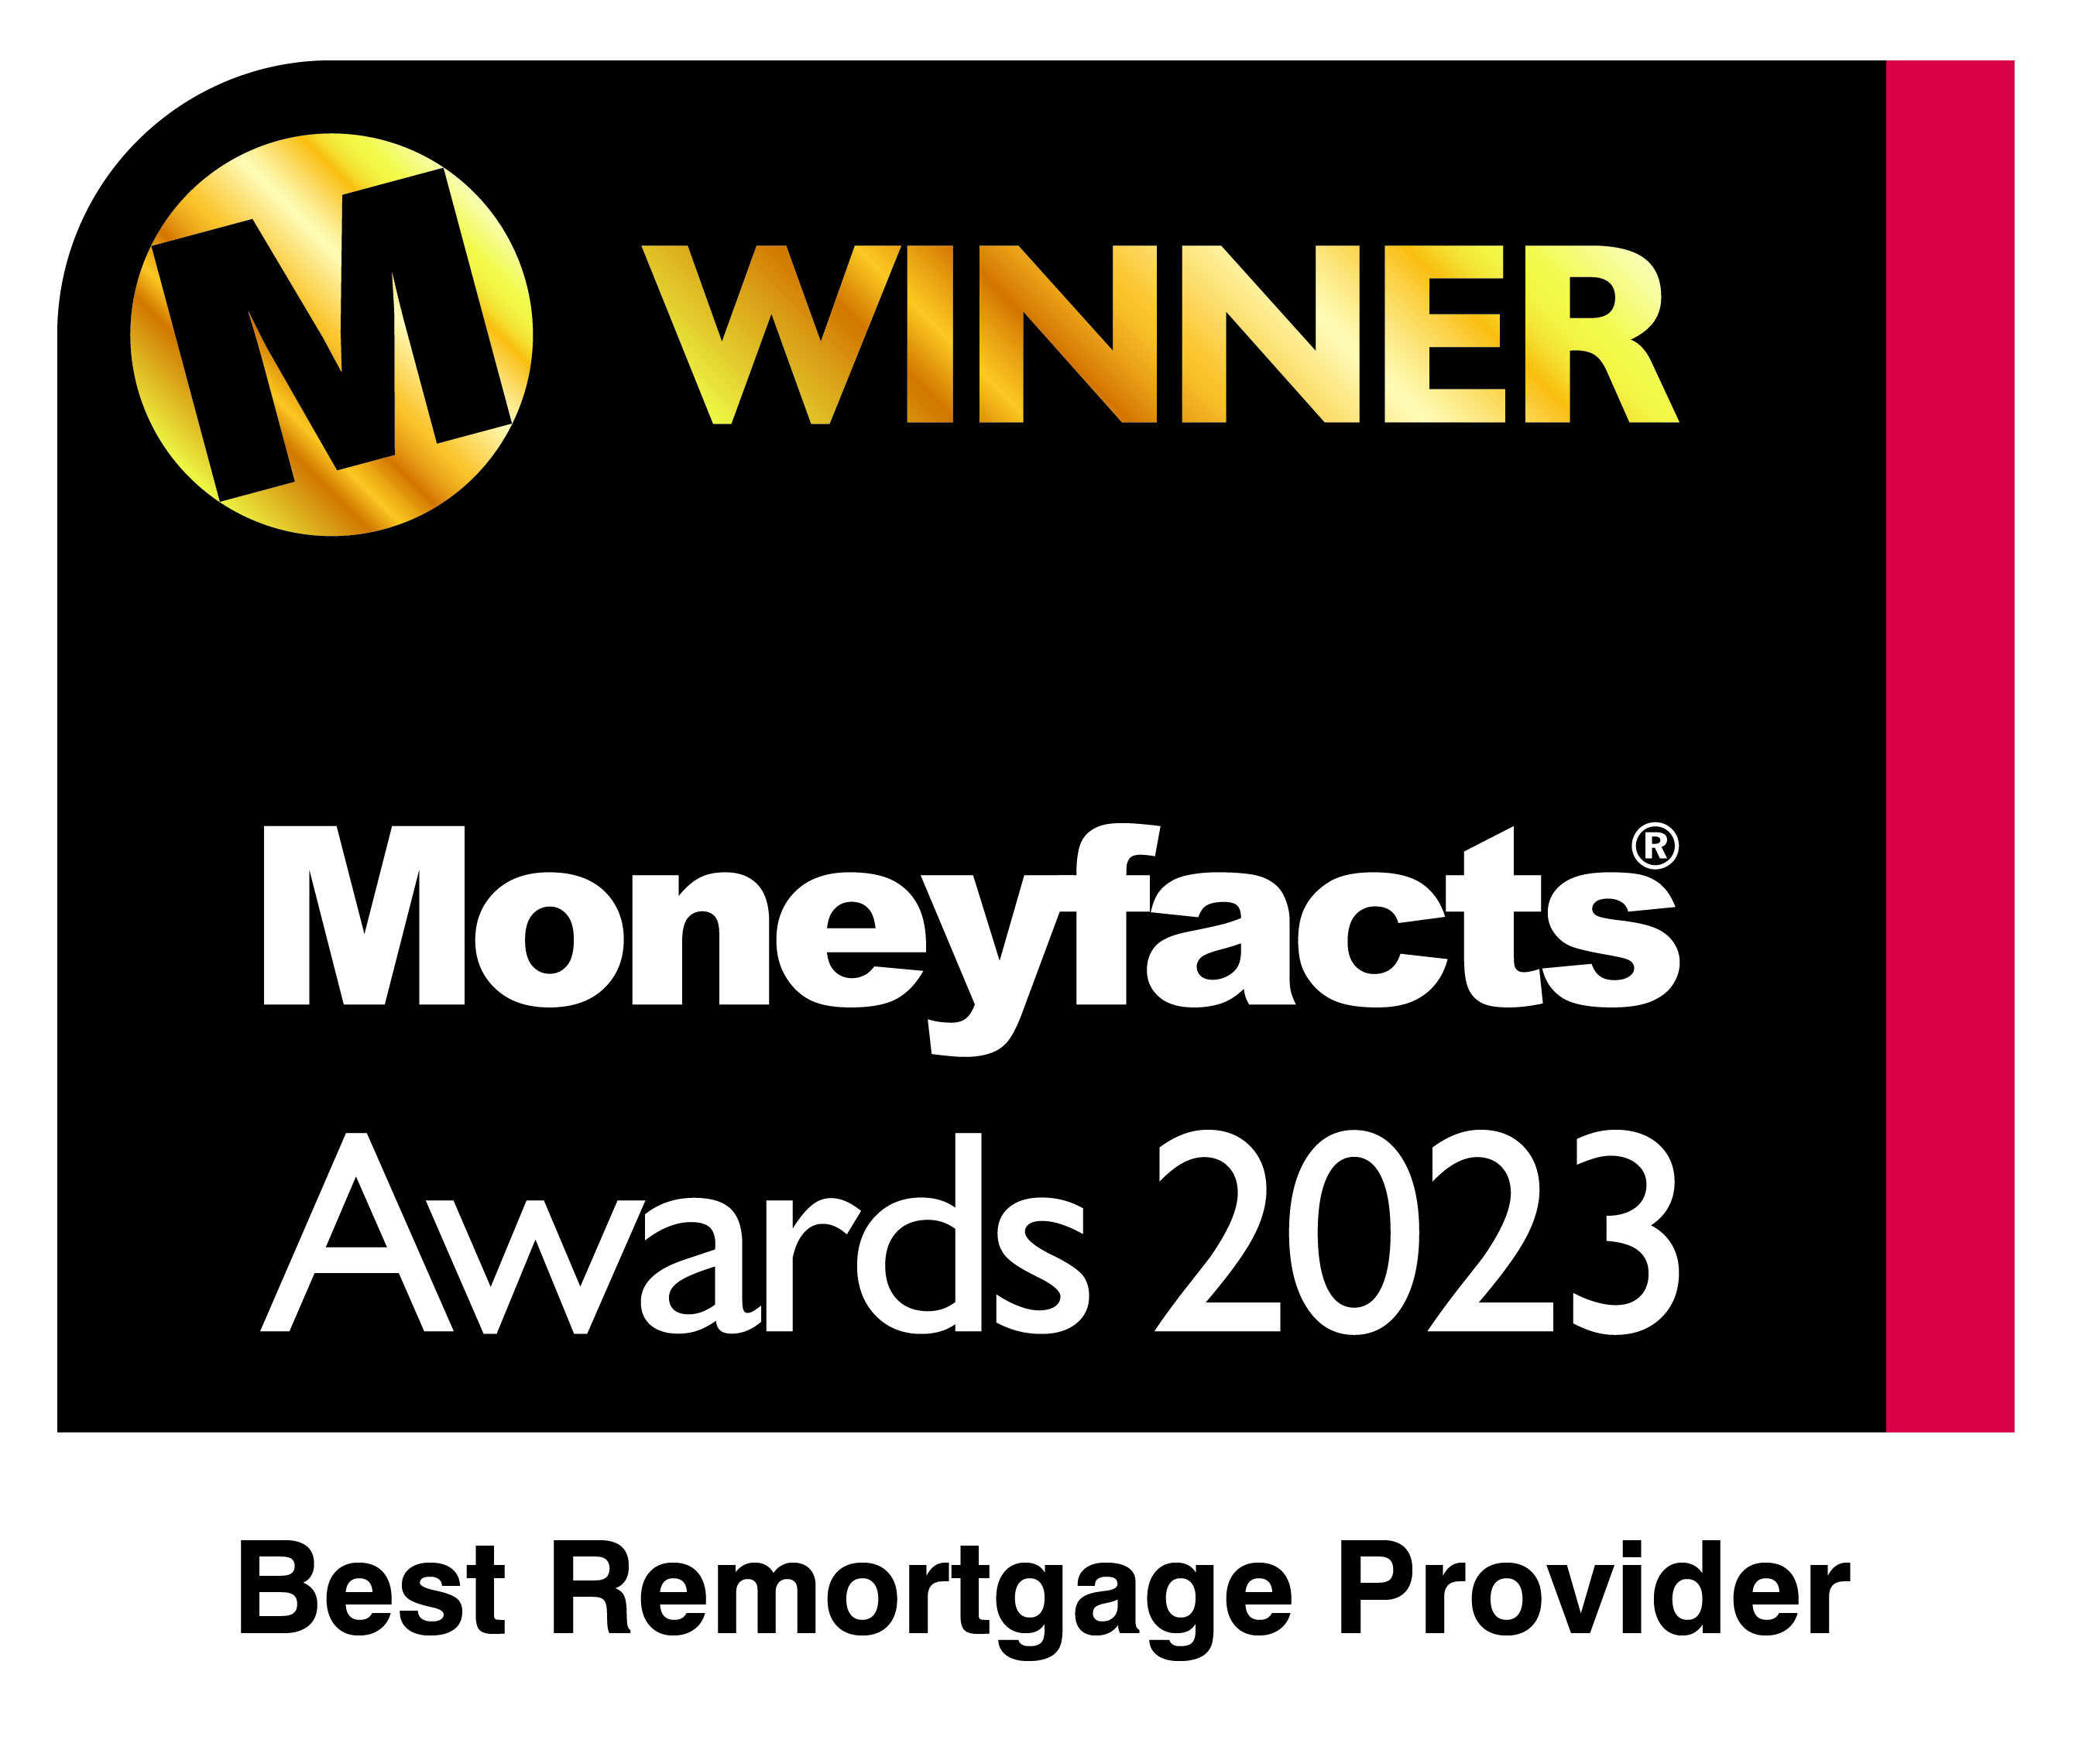 Moneyfacts winner awards 2023 - best remortgage provider